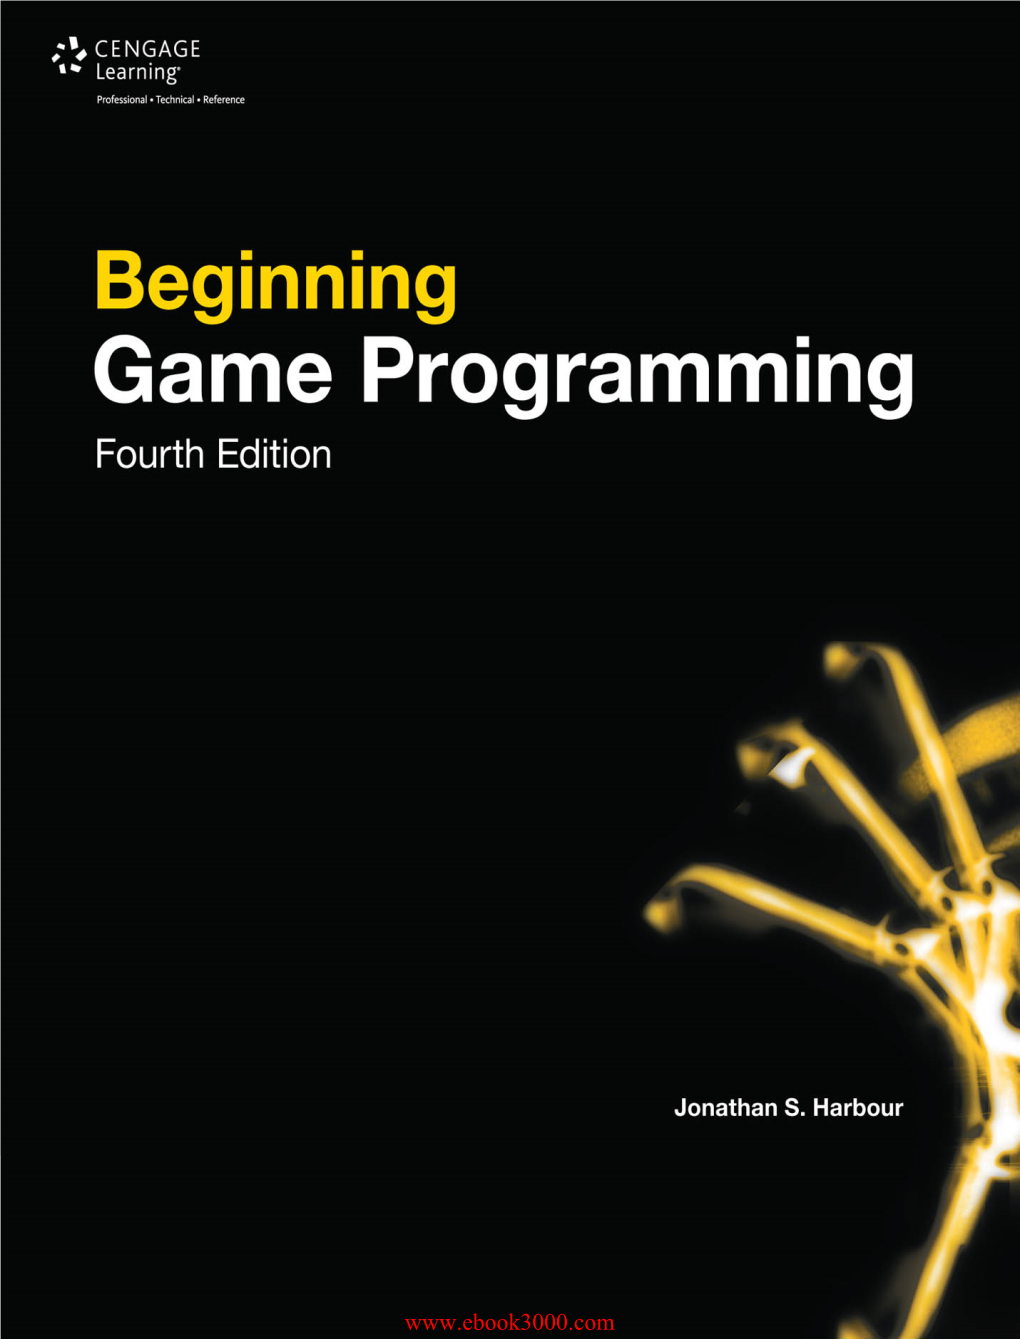 Beginning Game Programming, Fourth Edition